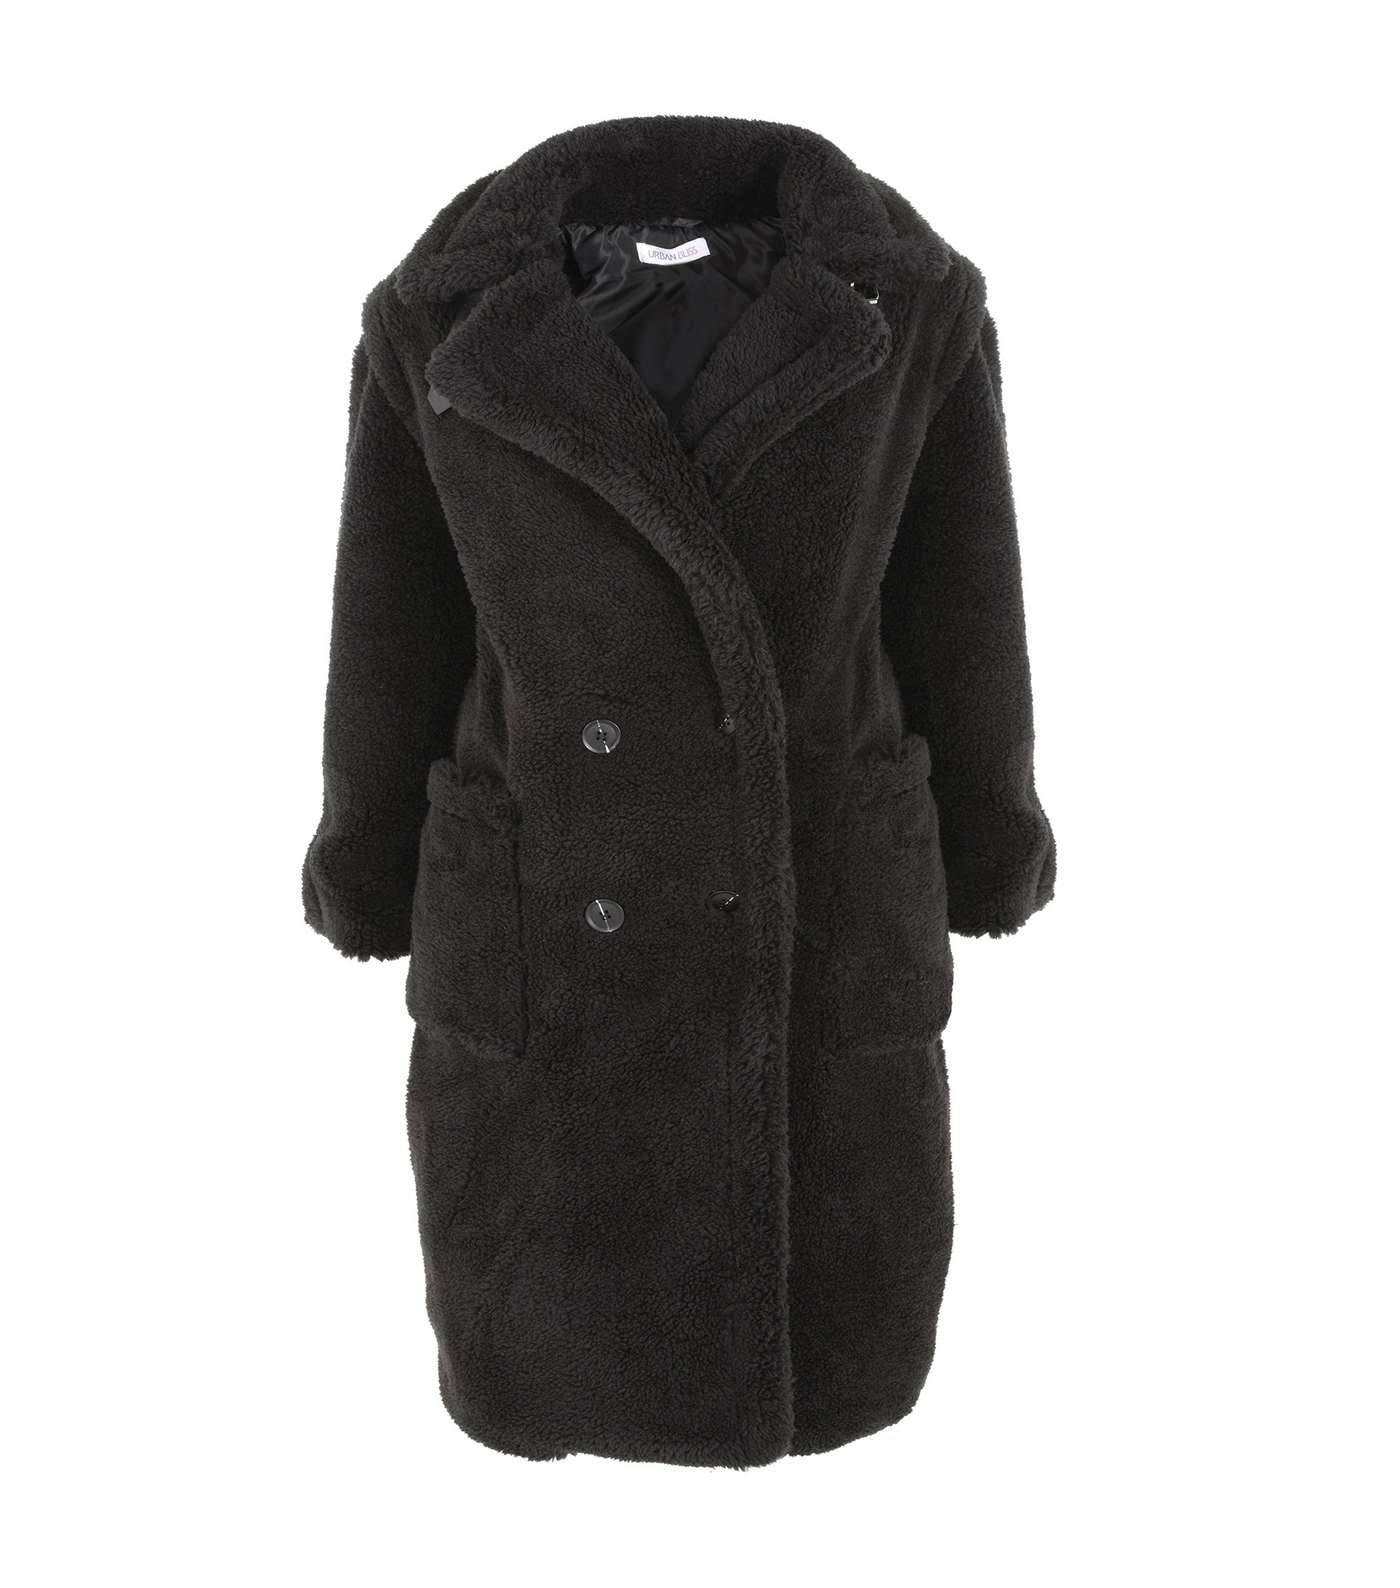 Urban Bliss Black Teddy Long Coat